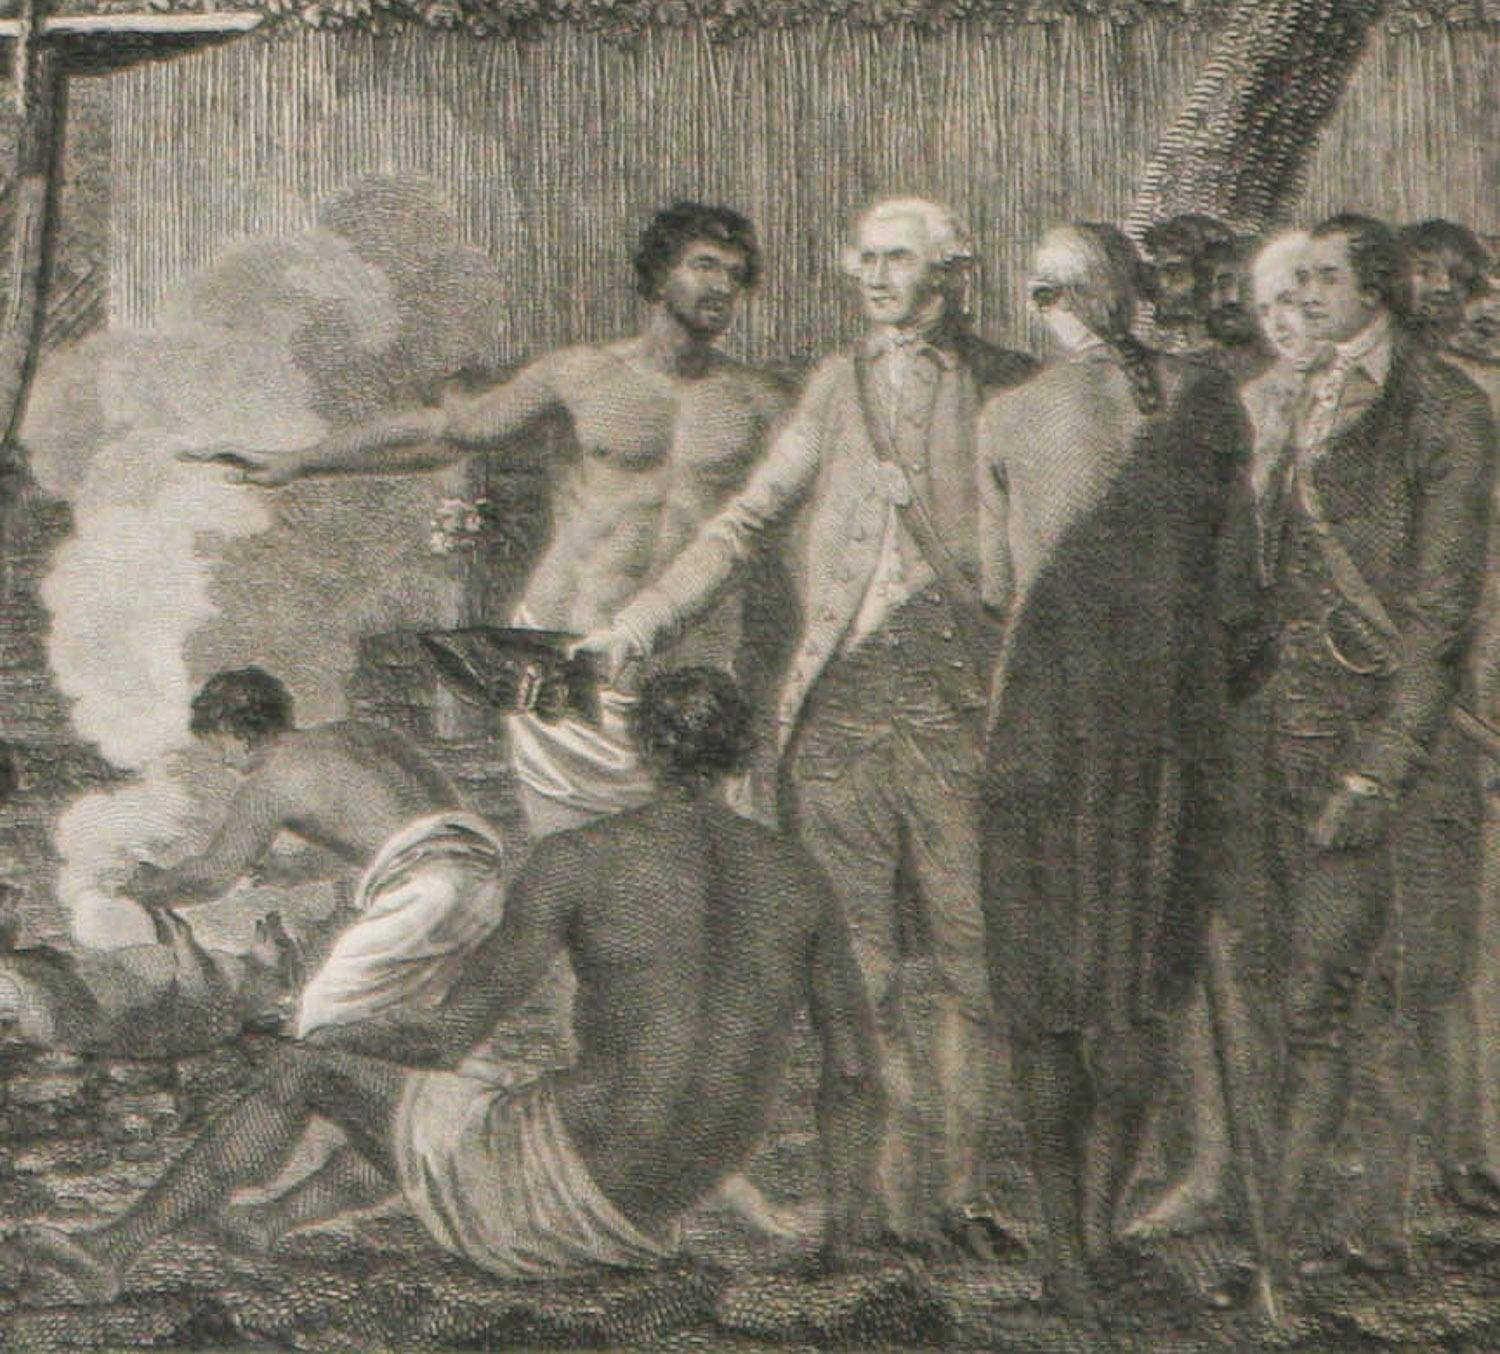 A Human Sacrifice, in a Morai, in Otaheite (Tahiti) 1784 James Cook Final Voyage - Print by John Webber